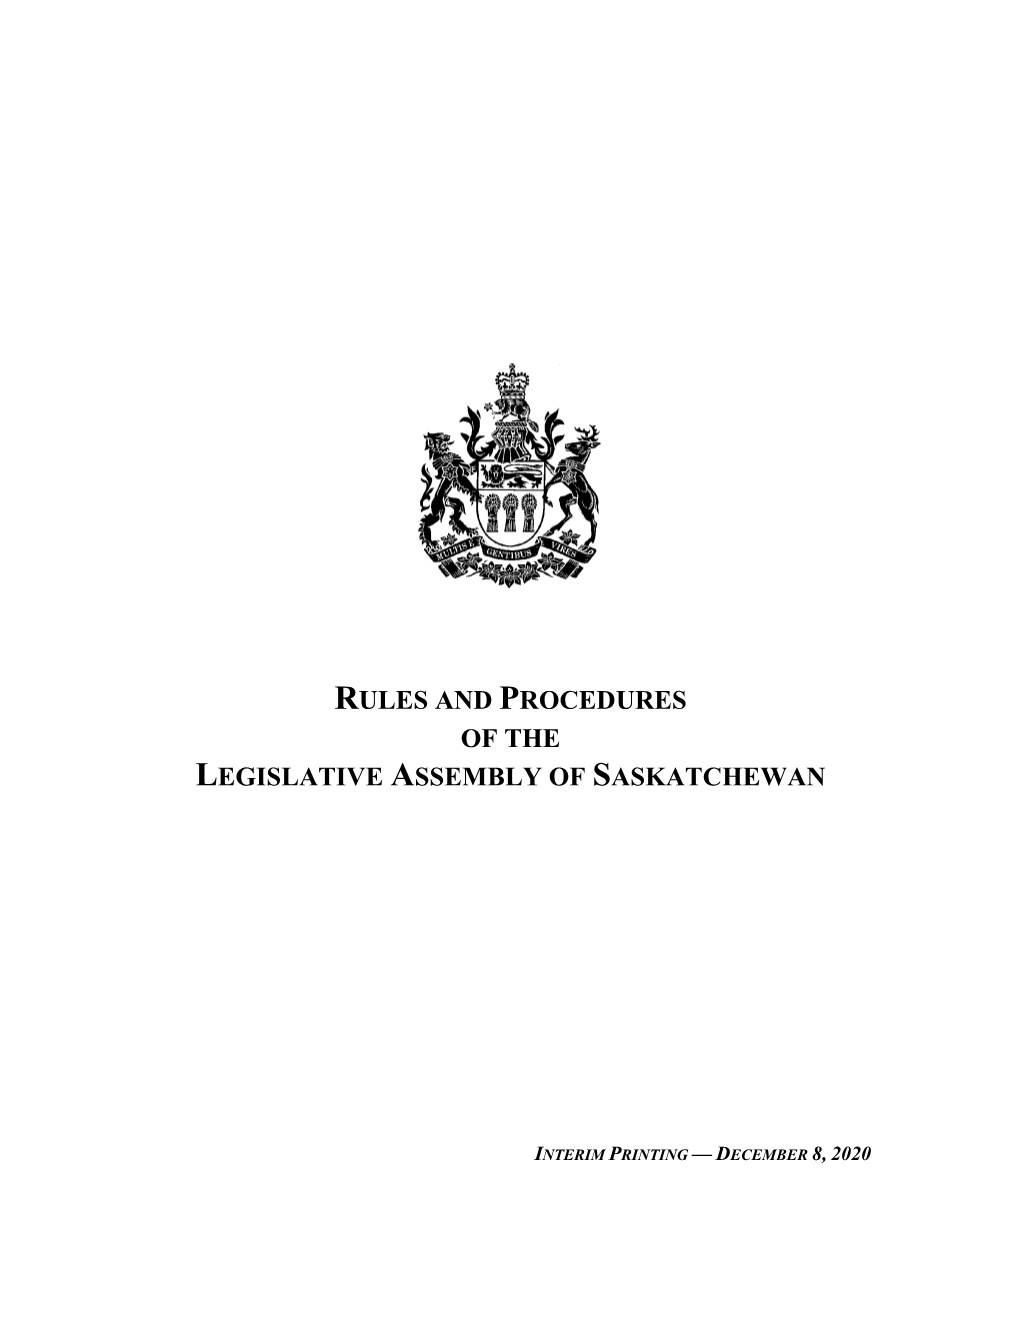 Rules and Procedures of the Legislative Assembly of Saskatchewan